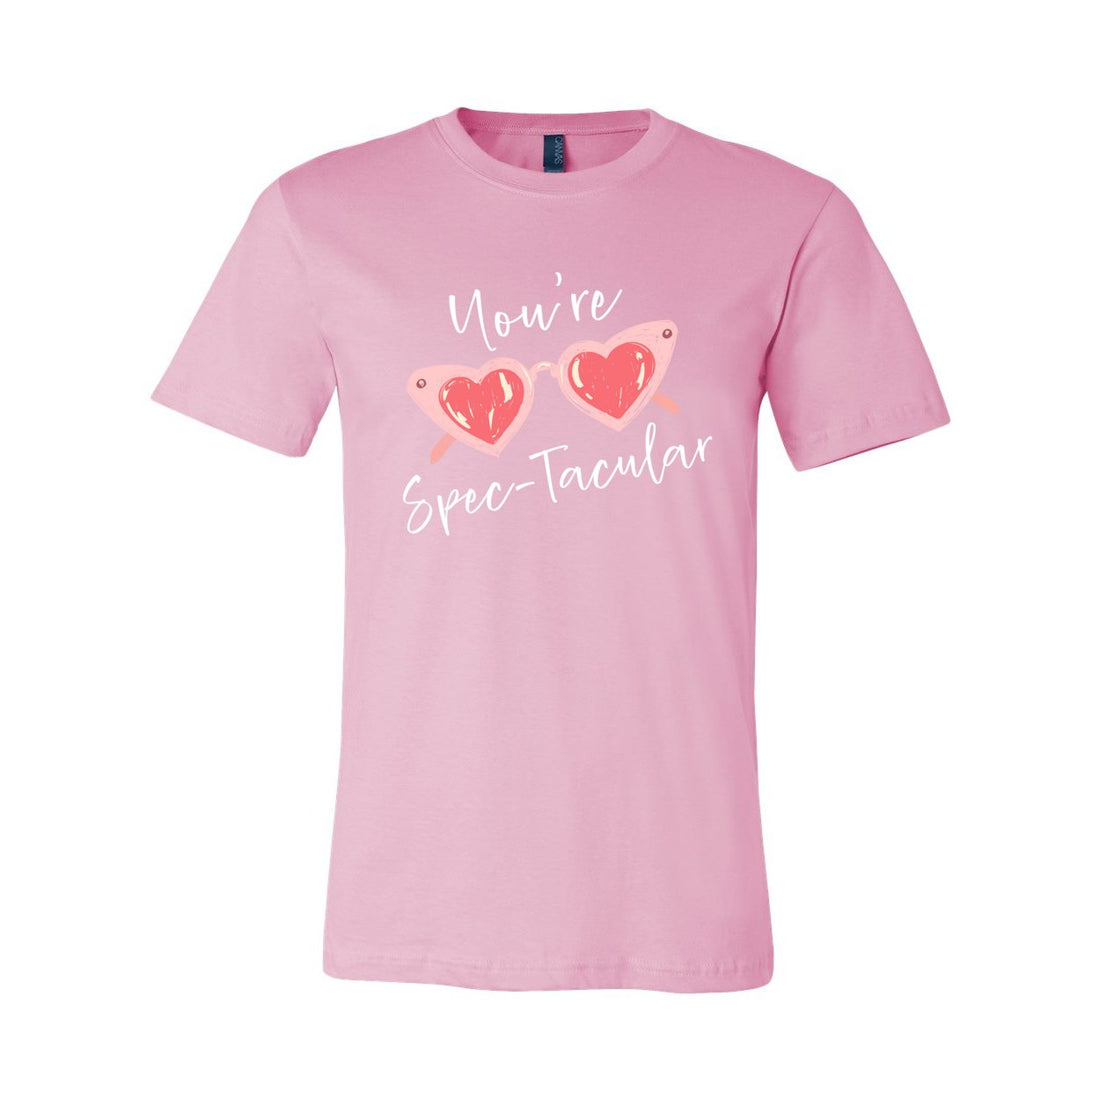 Spec-Tacular Valentine Jersey Tee - T-Shirts - Positively Sassy - Spec-Tacular Valentine Jersey Tee